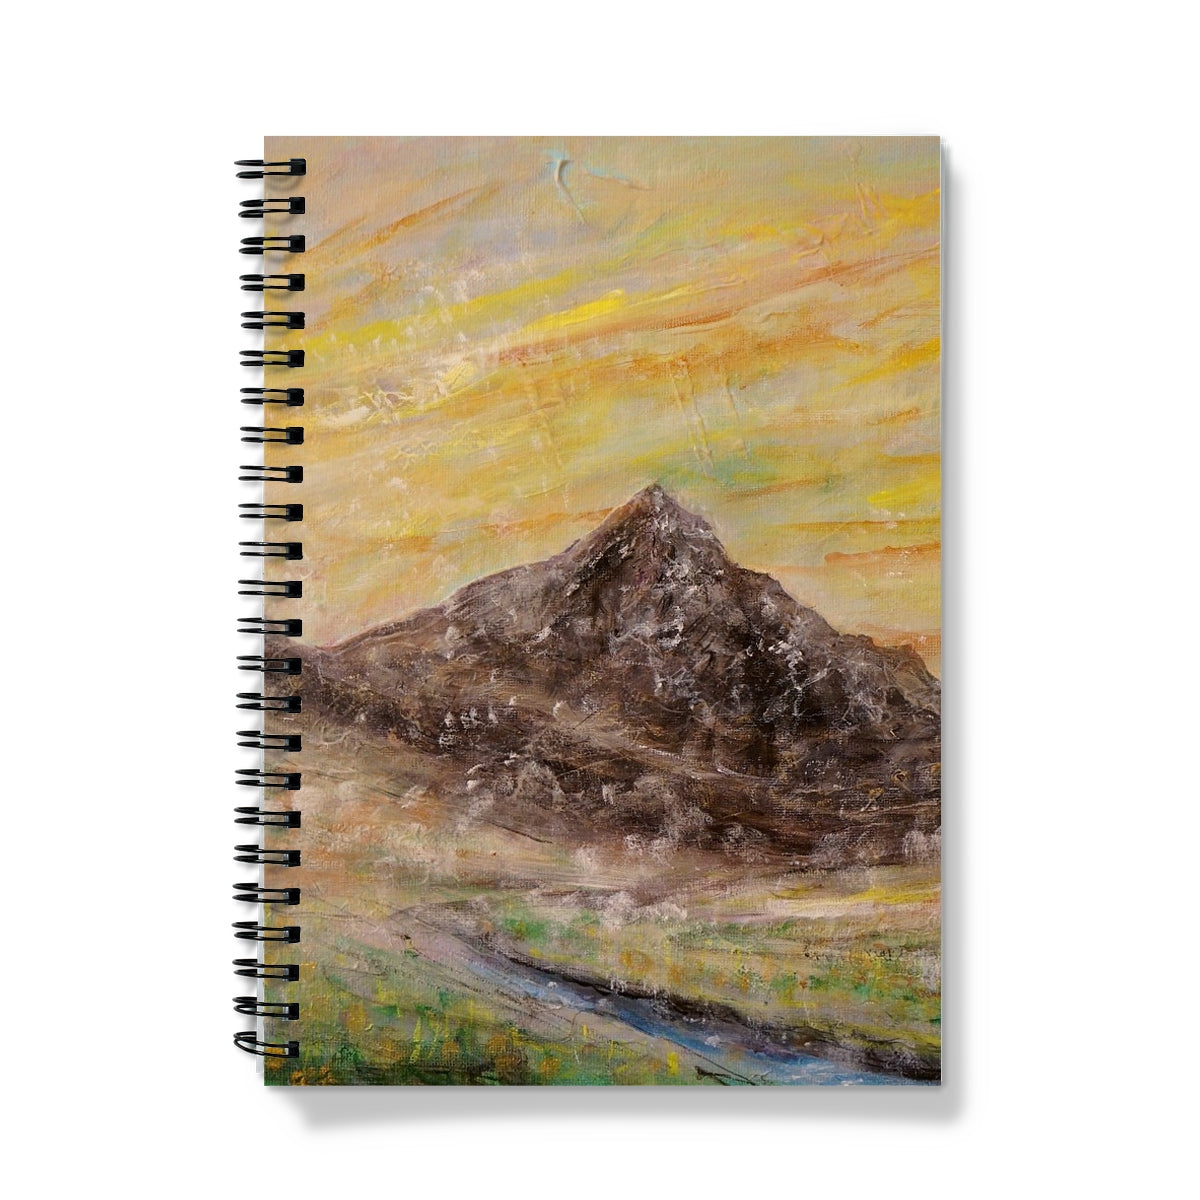 Glen Rosa Mist Arran Art Gifts Notebook-Journals & Notebooks-Arran Art Gallery-A5-Lined-Paintings, Prints, Homeware, Art Gifts From Scotland By Scottish Artist Kevin Hunter